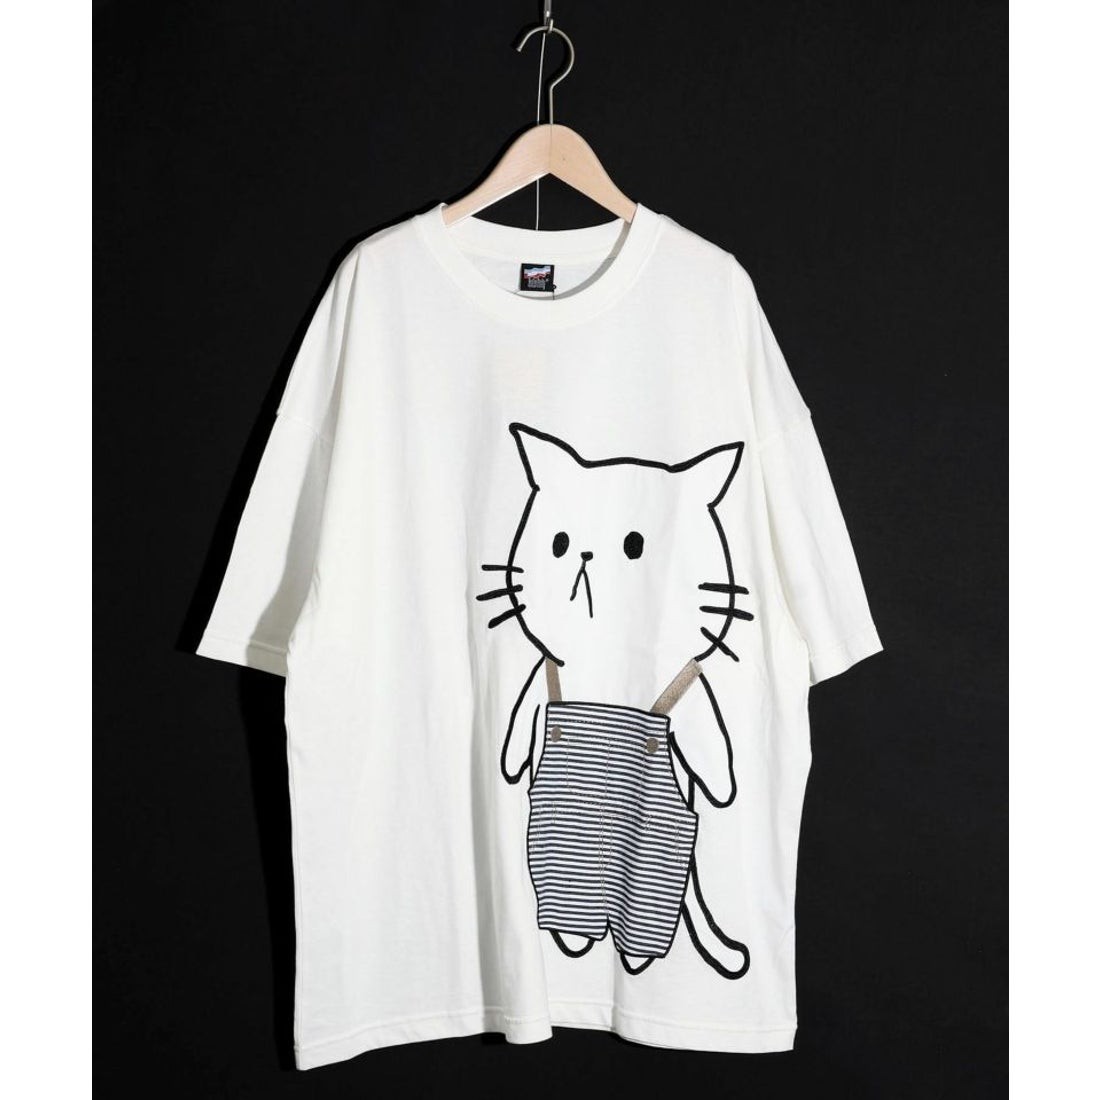 ScoLar スカラー パリティ オーバーオールを着たネコ 刺繍 アップリケ BIG-T Tシャツ 新品 未使用 猫柄 ネコ柄 ユニセックス 男女兼用